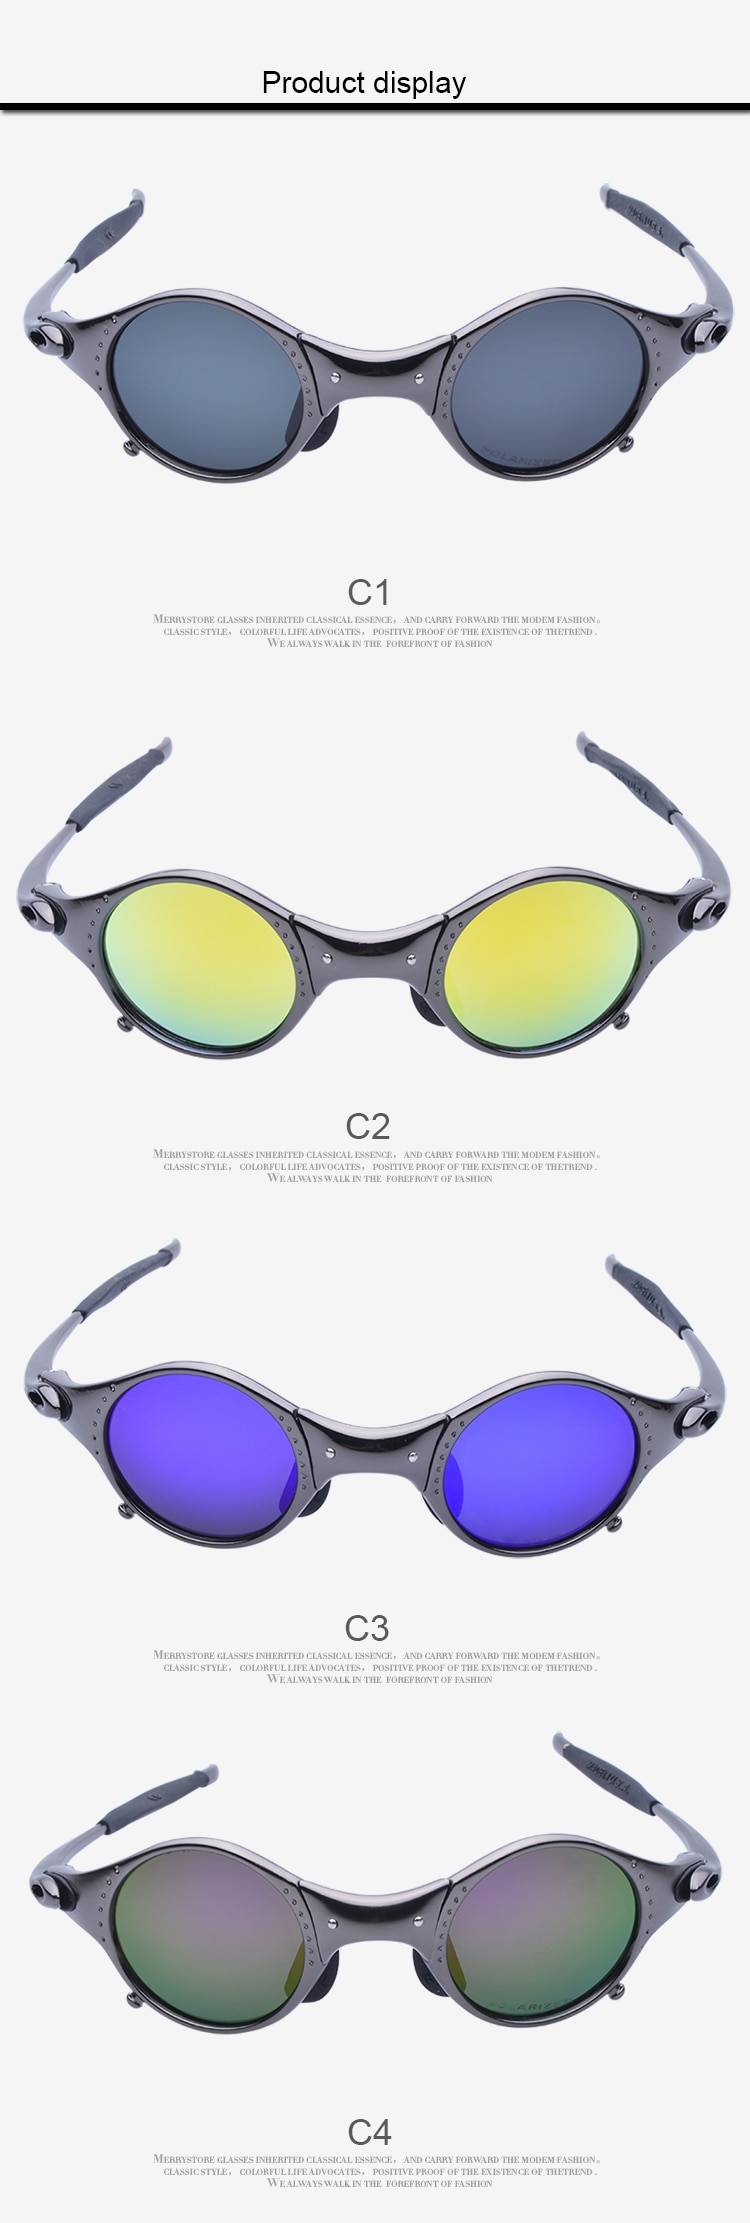 Techwear Sports Riding Cycling Sunglasses Metal Frame Polarized Cycling Glasses Men8217s Sunglasses UV400 Glasses Cyclin 19